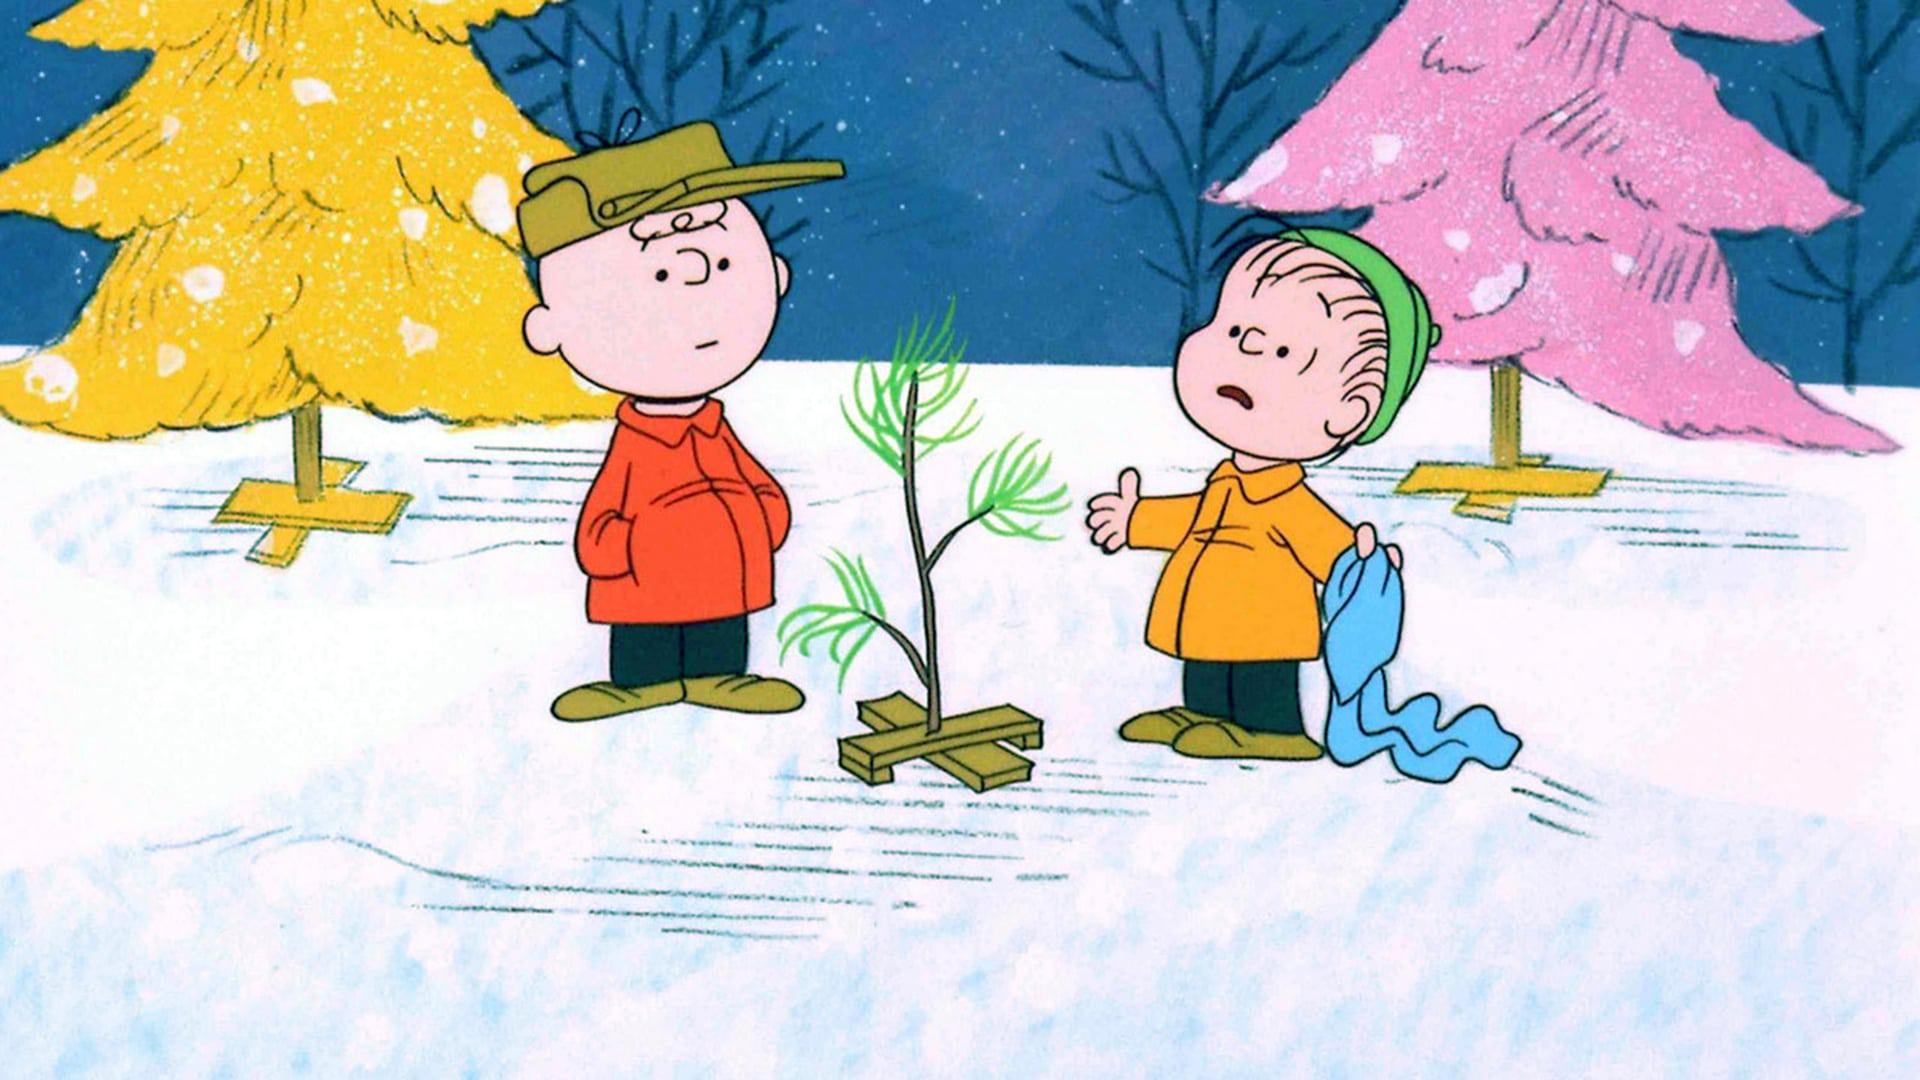 Backdrop Image for A Charlie Brown Christmas